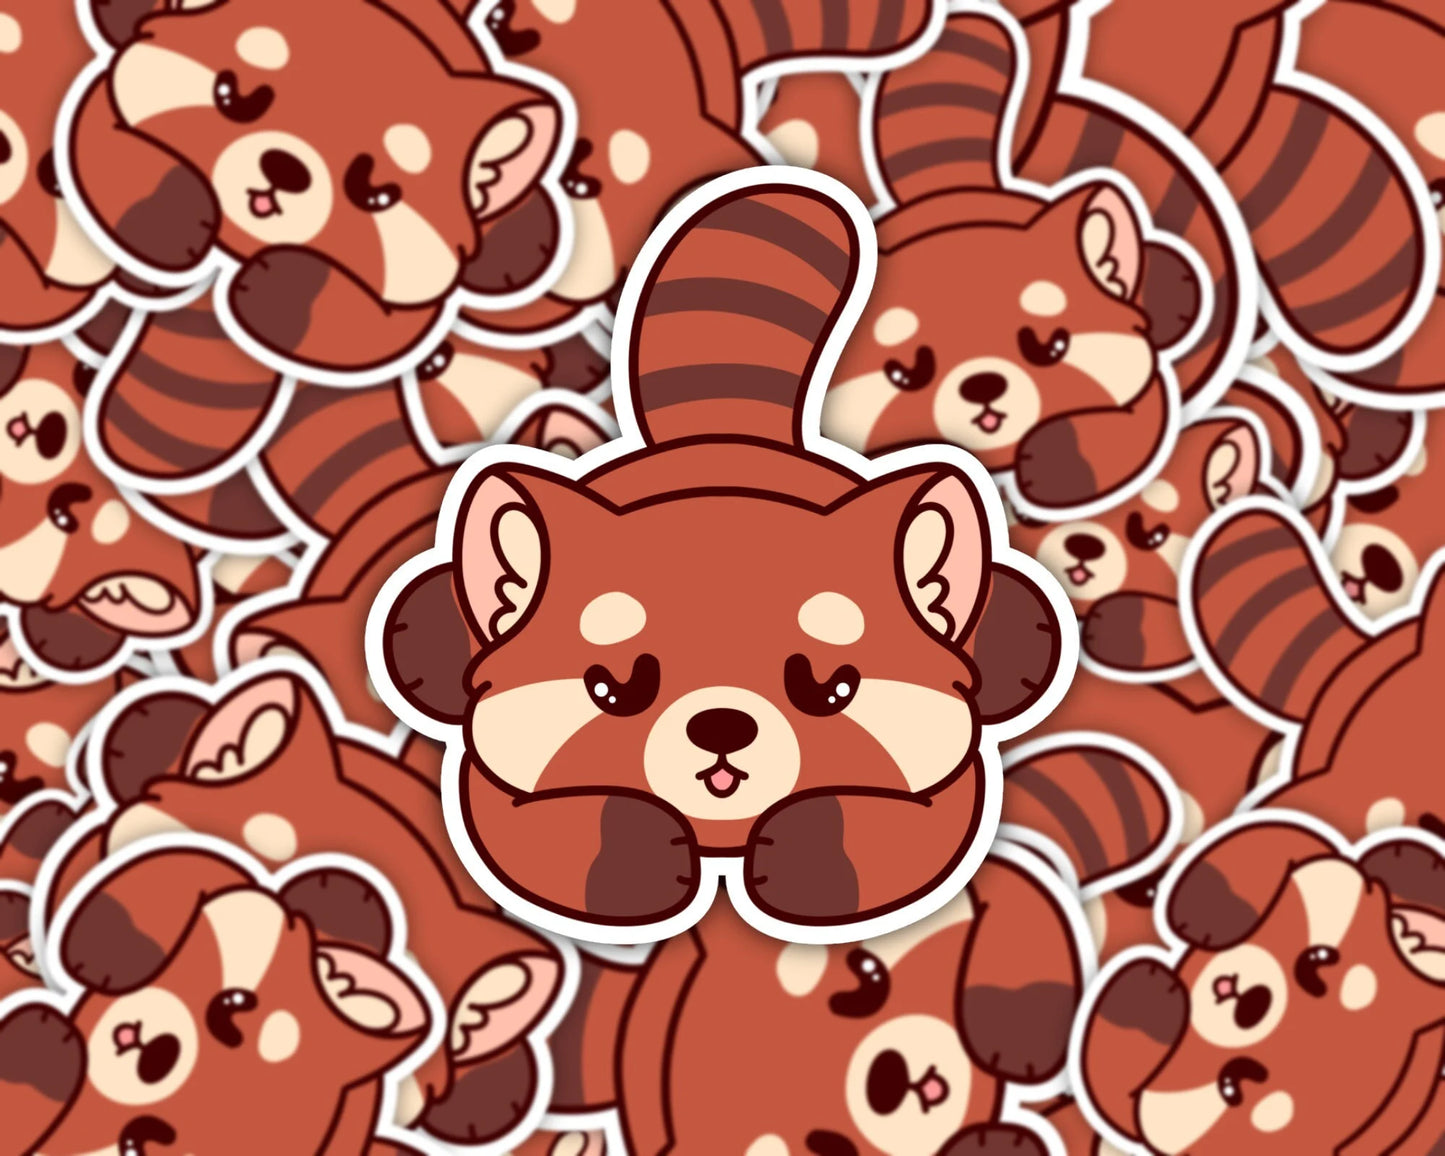 "Berry" the Red Panda Sleeping Waterproof Vinyl Sticker